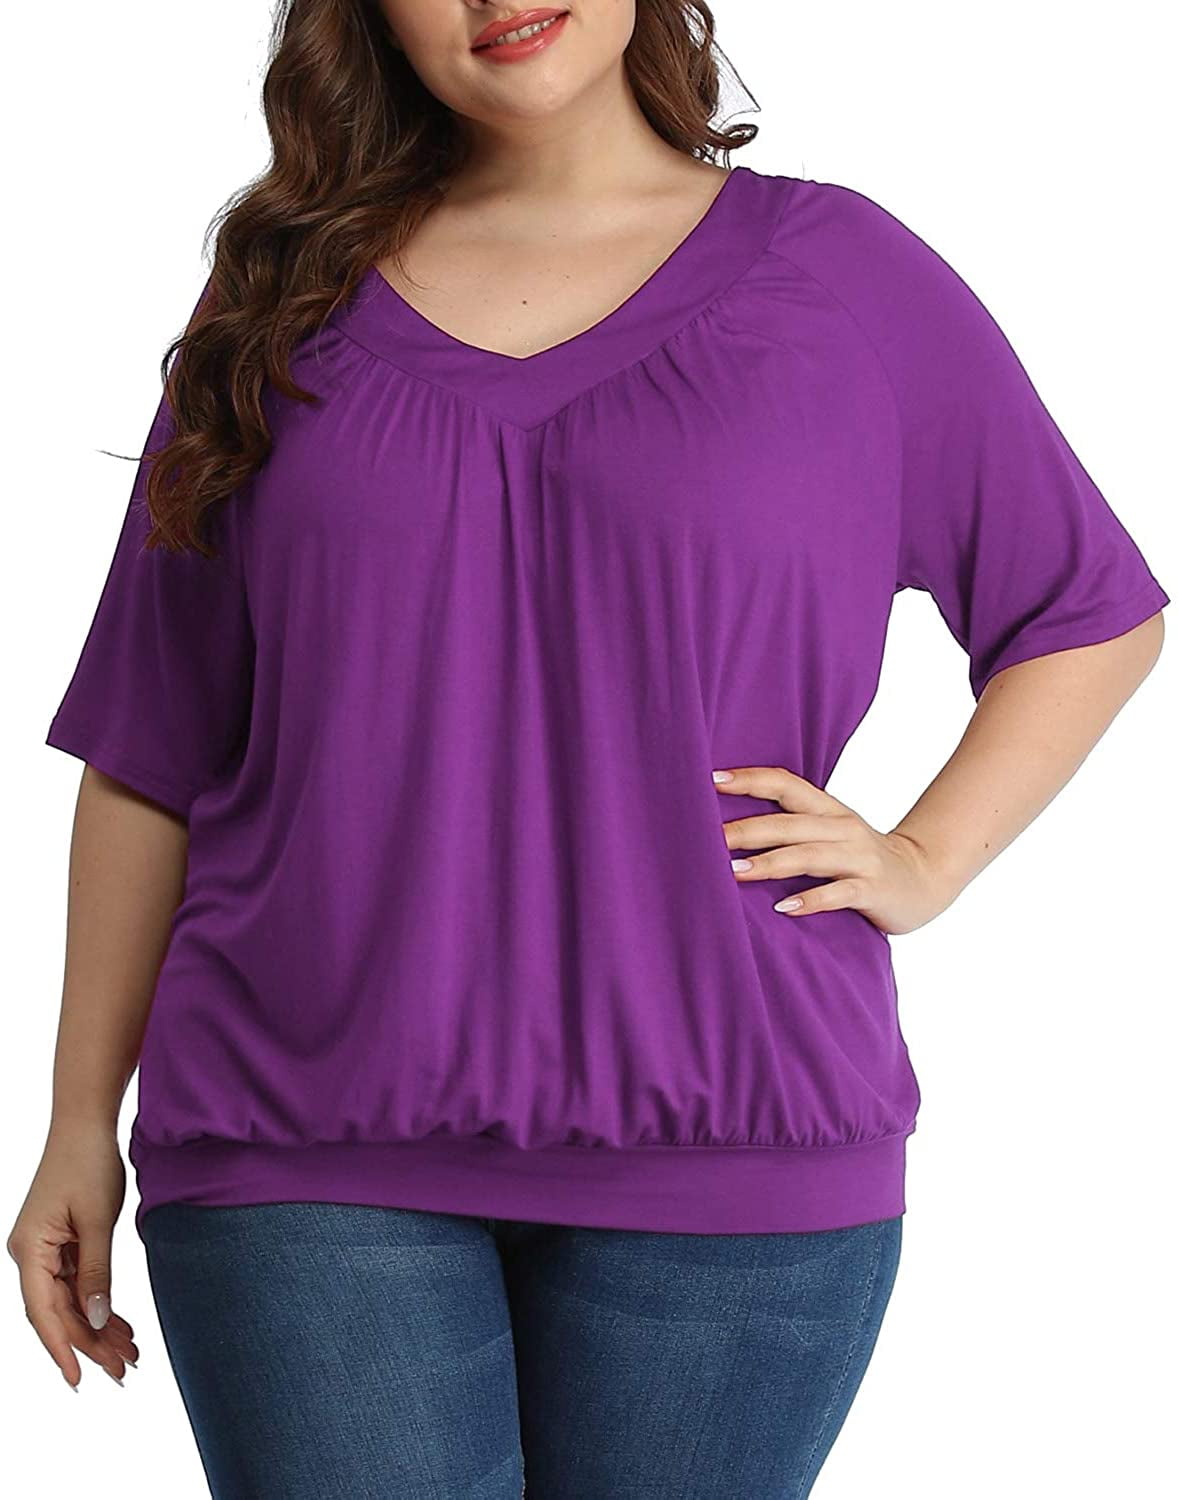 Bugt praktisk Effektivitet andy & natalie Women's Plus Size Tops Flowy Casual Summer Blouses Pleated  Short Sleeve Cute Tunics T Shirts Purple 4XL - Walmart.com